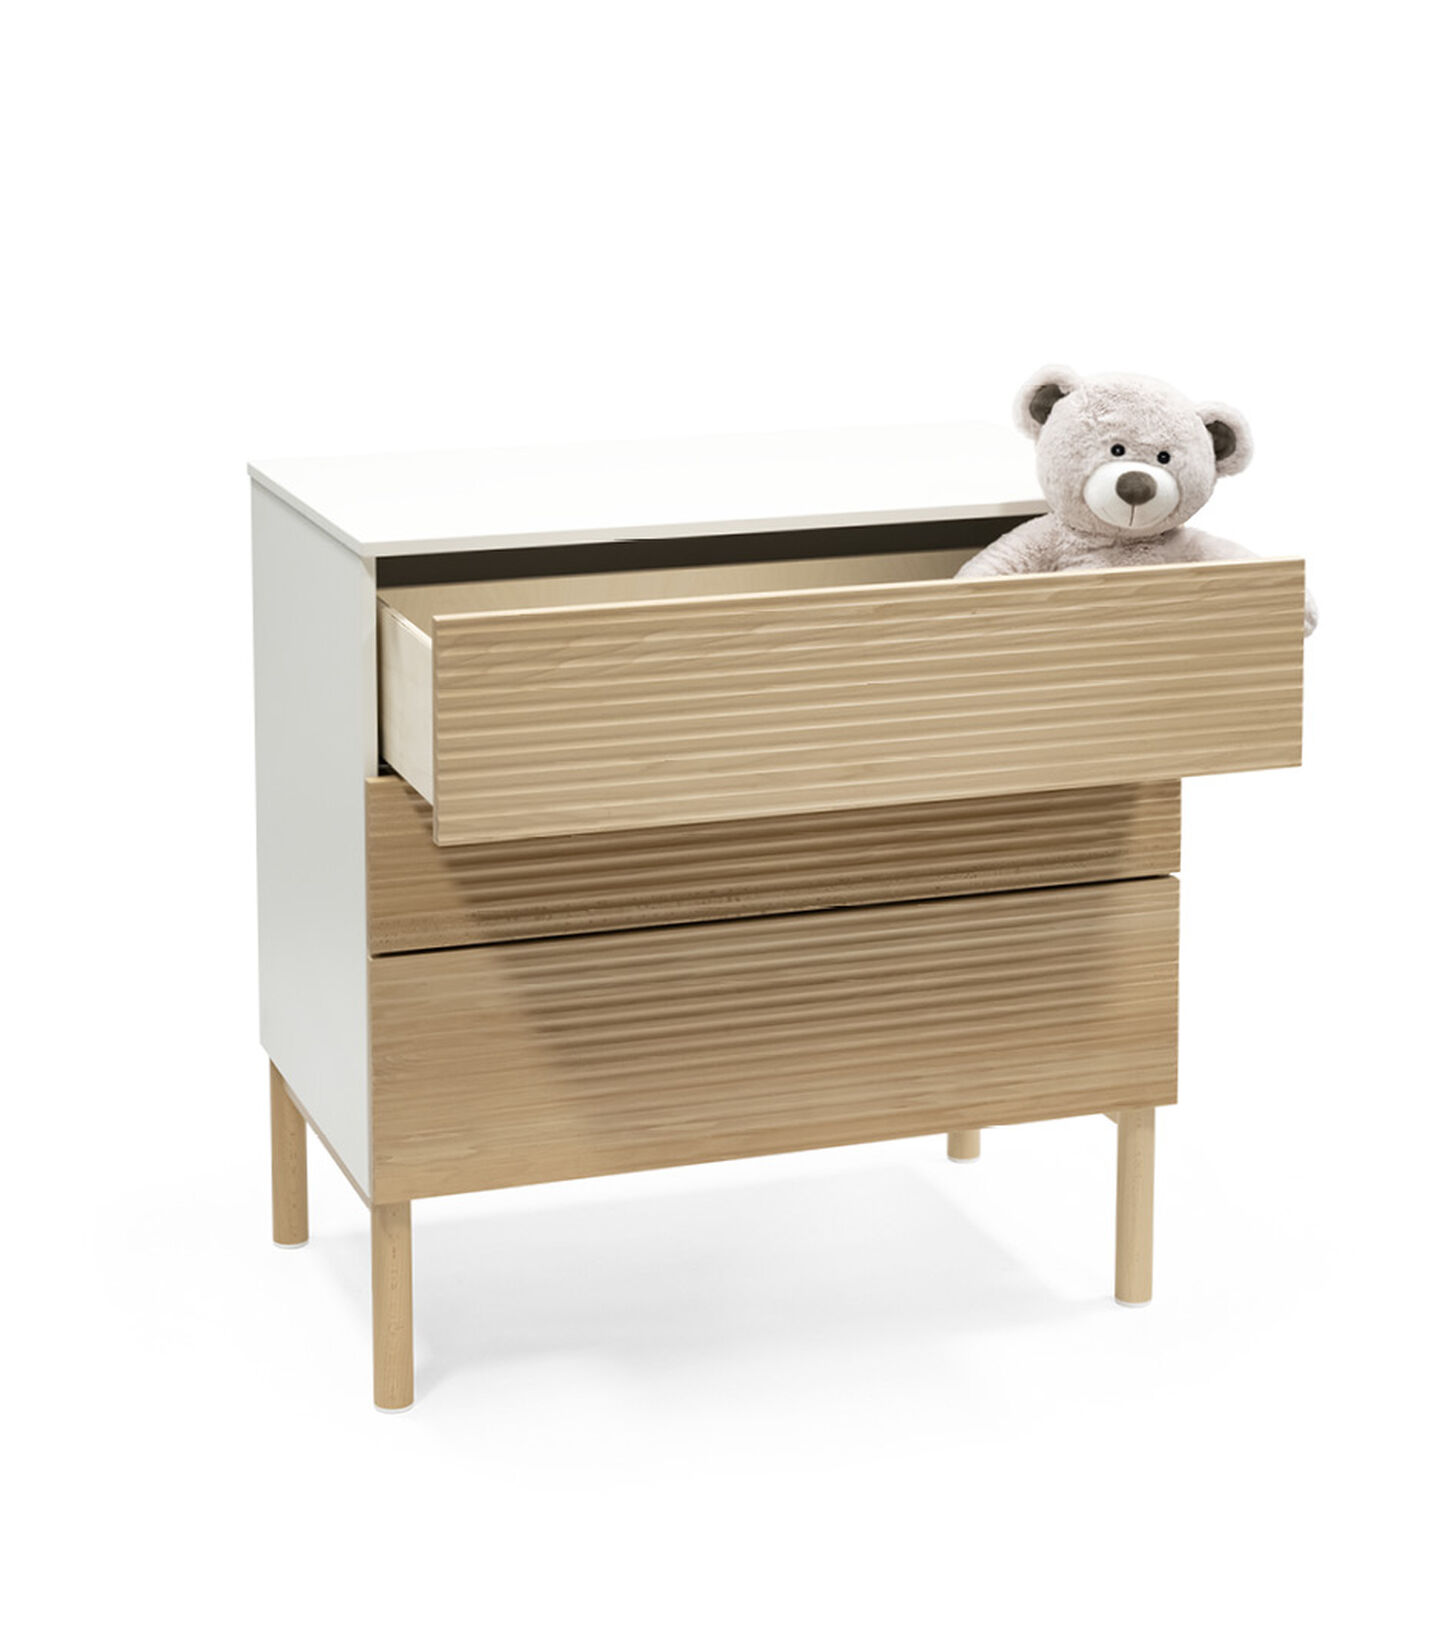 Stokke® Sleepi™ Dresser with open drawer. view 4